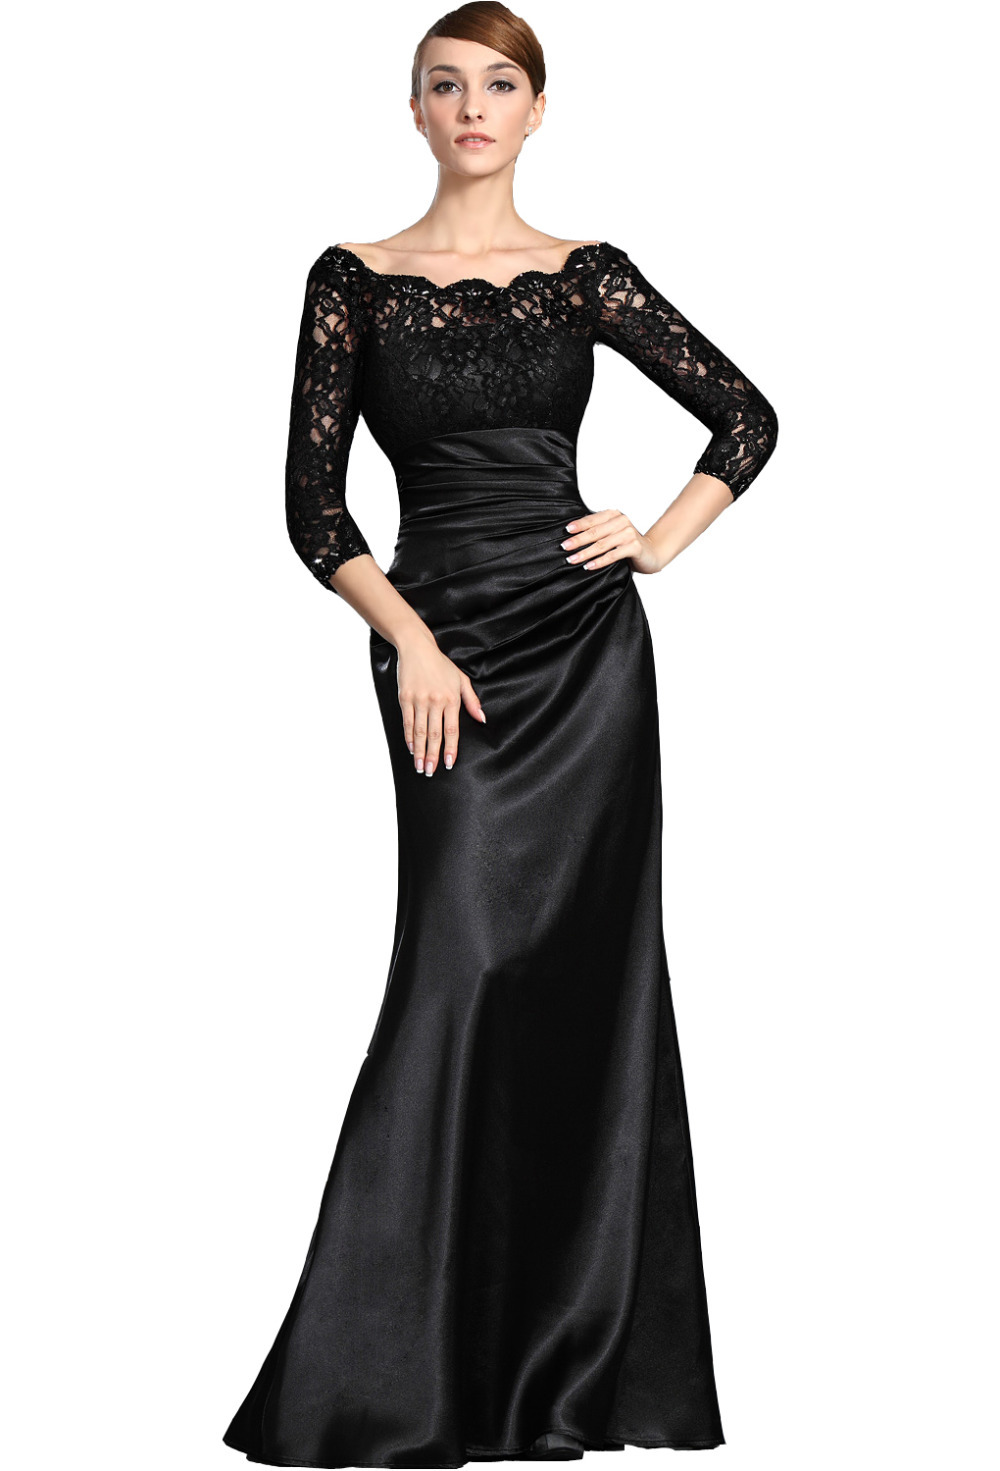 Long black grecian dress